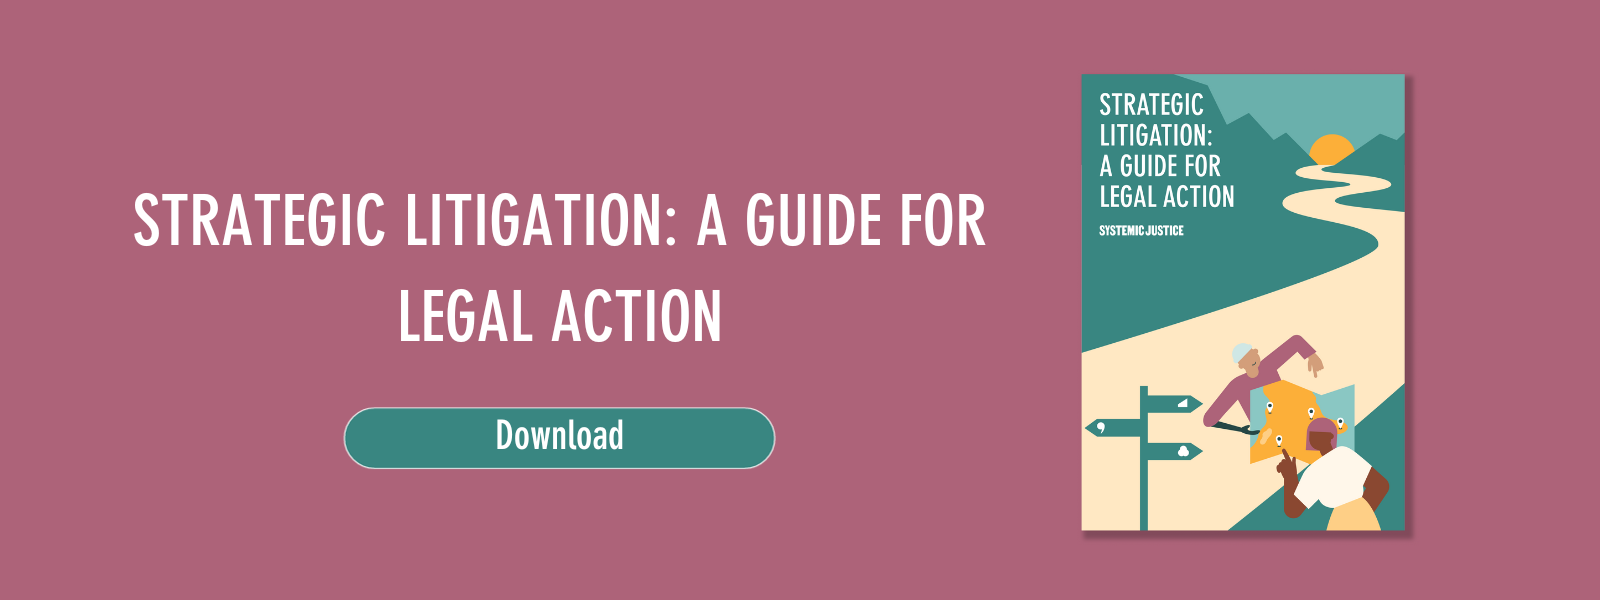 Strategic litigation: a guide for legal action